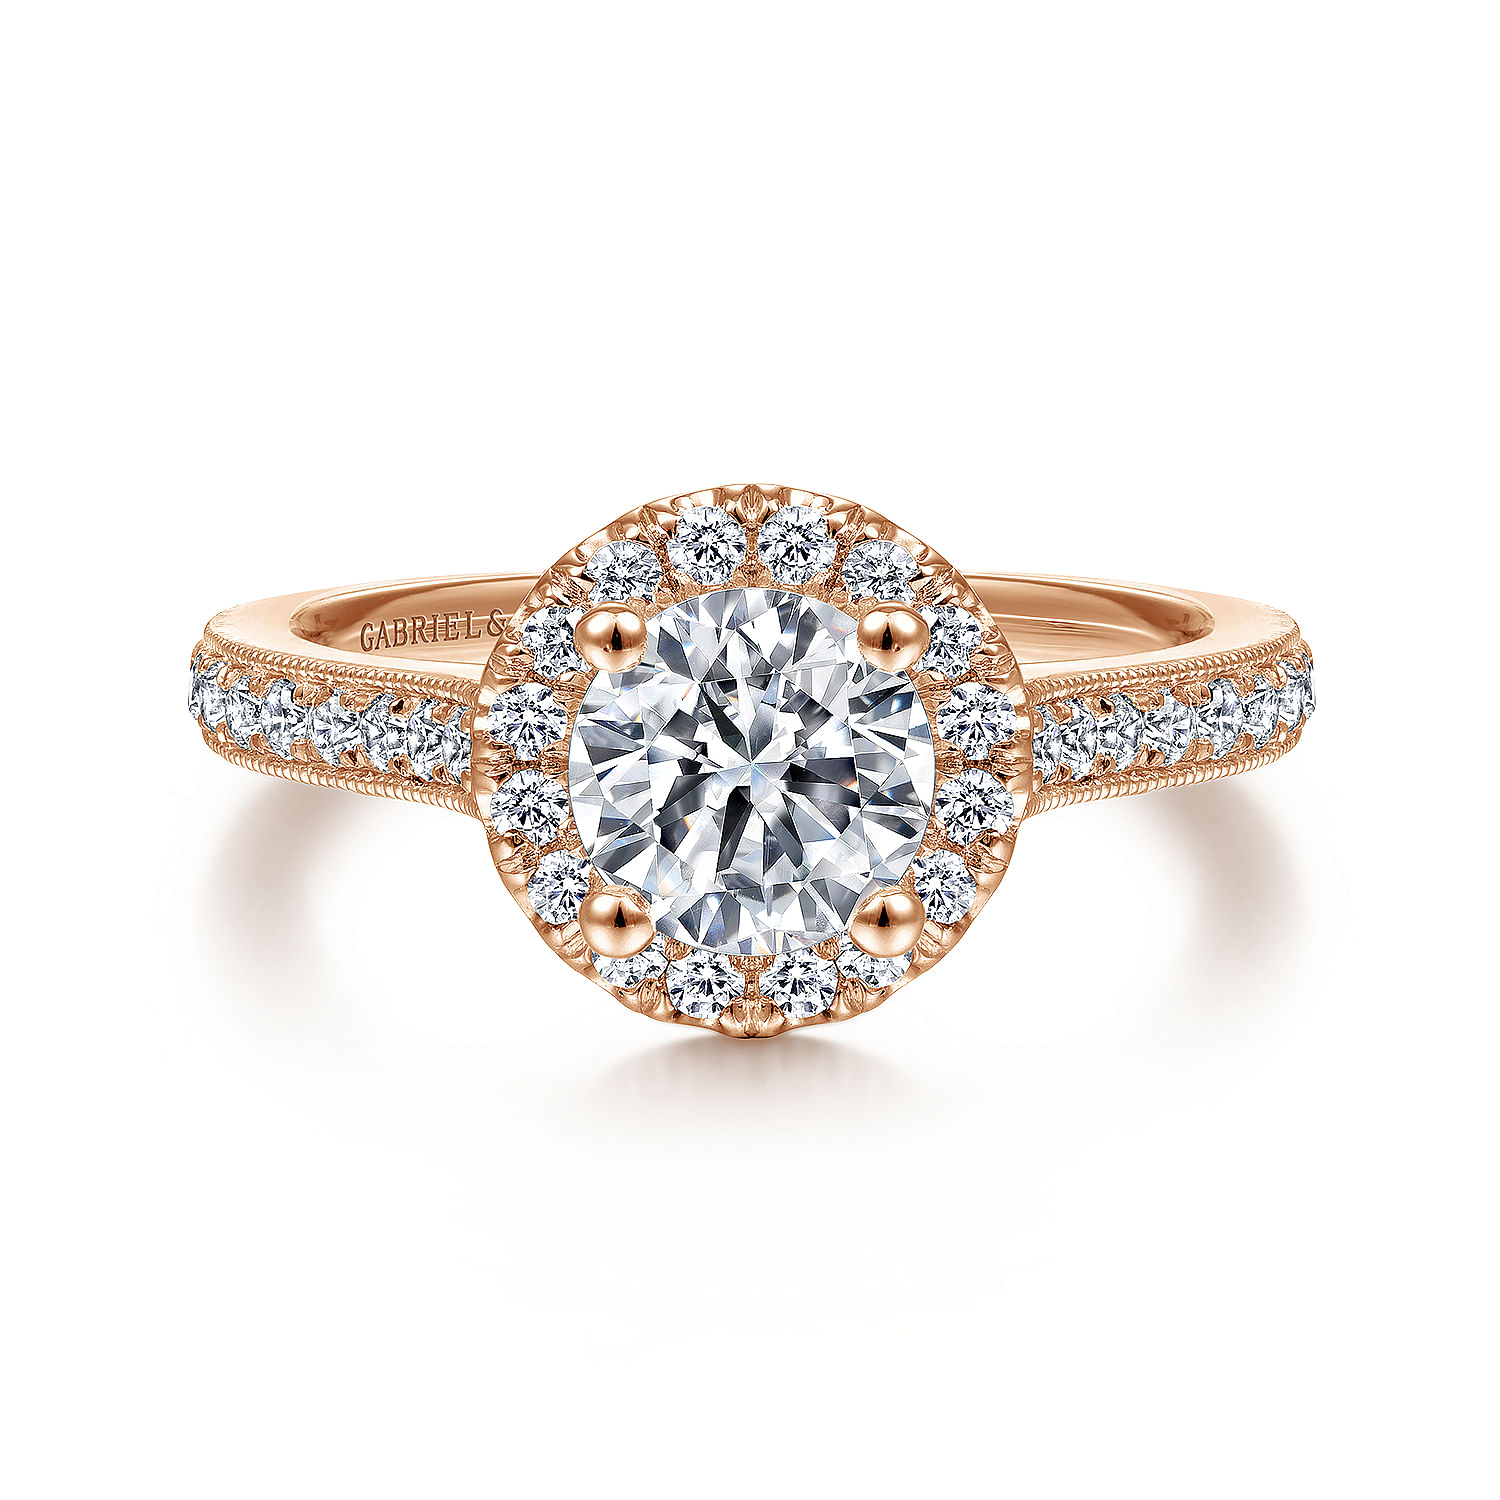 Gabriel - Vintage Inspired 14K Rose Gold Round Halo Diamond Engagement Ring